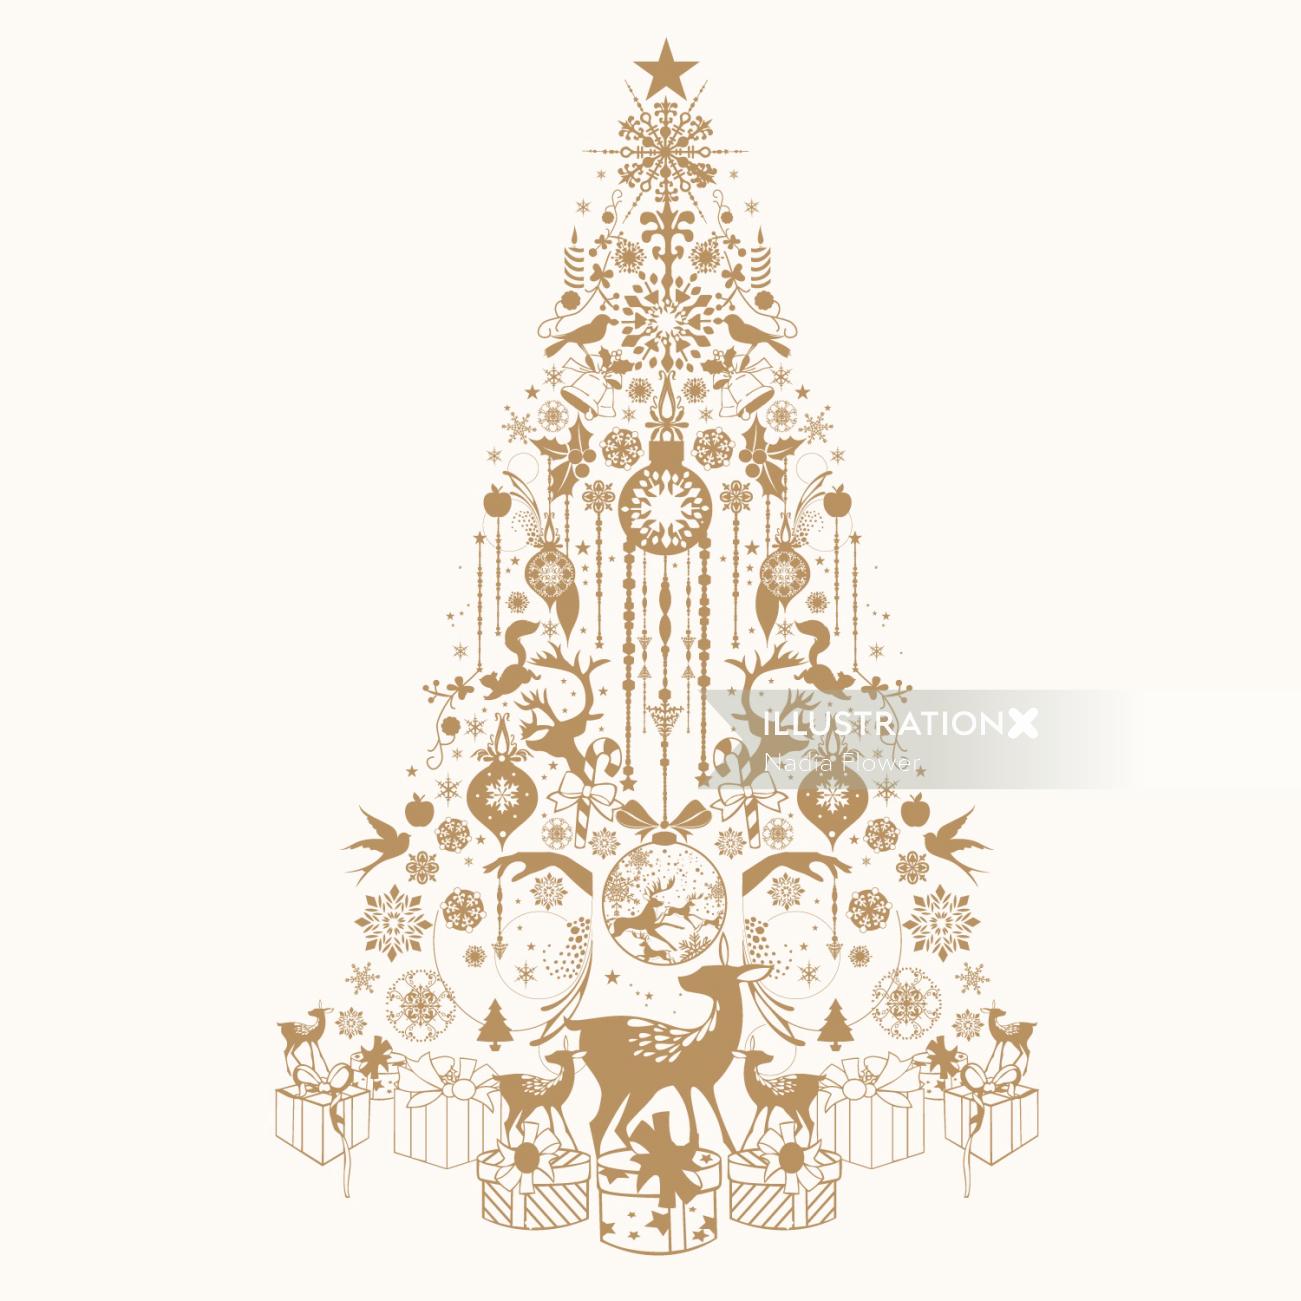 Decorative Christmas tree
